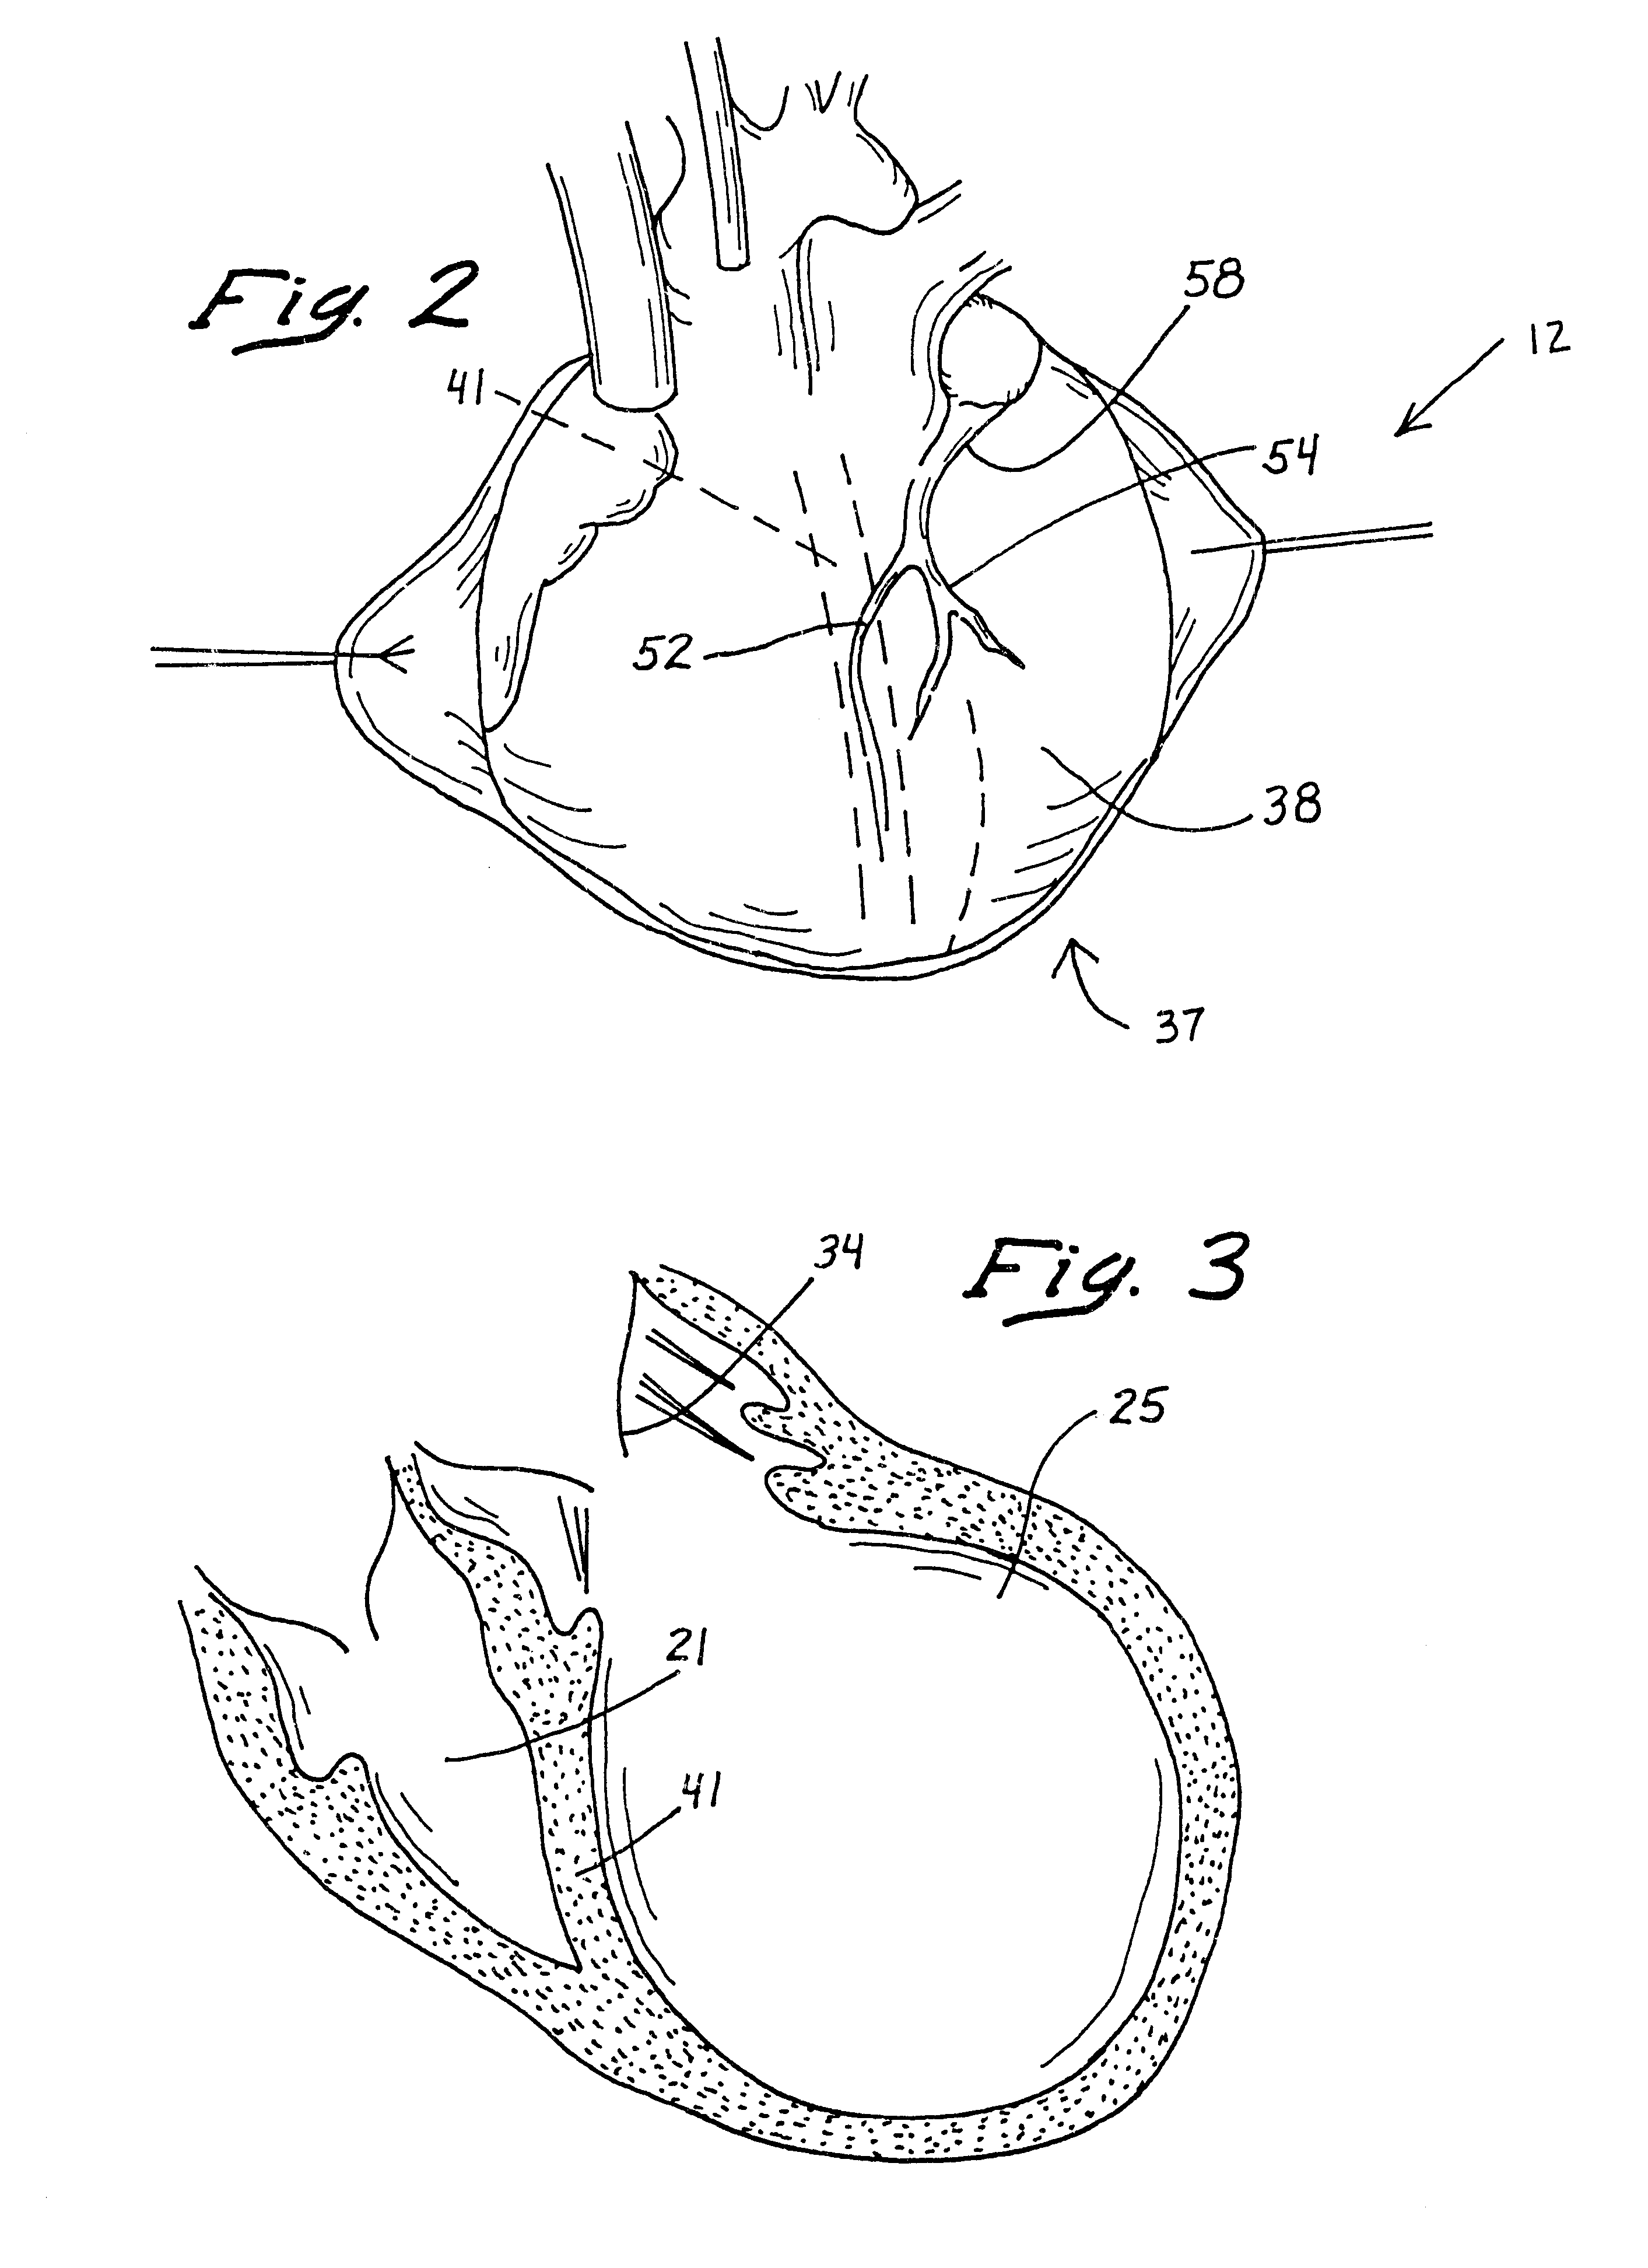 Anterior segment coronary restoration apparatus and method